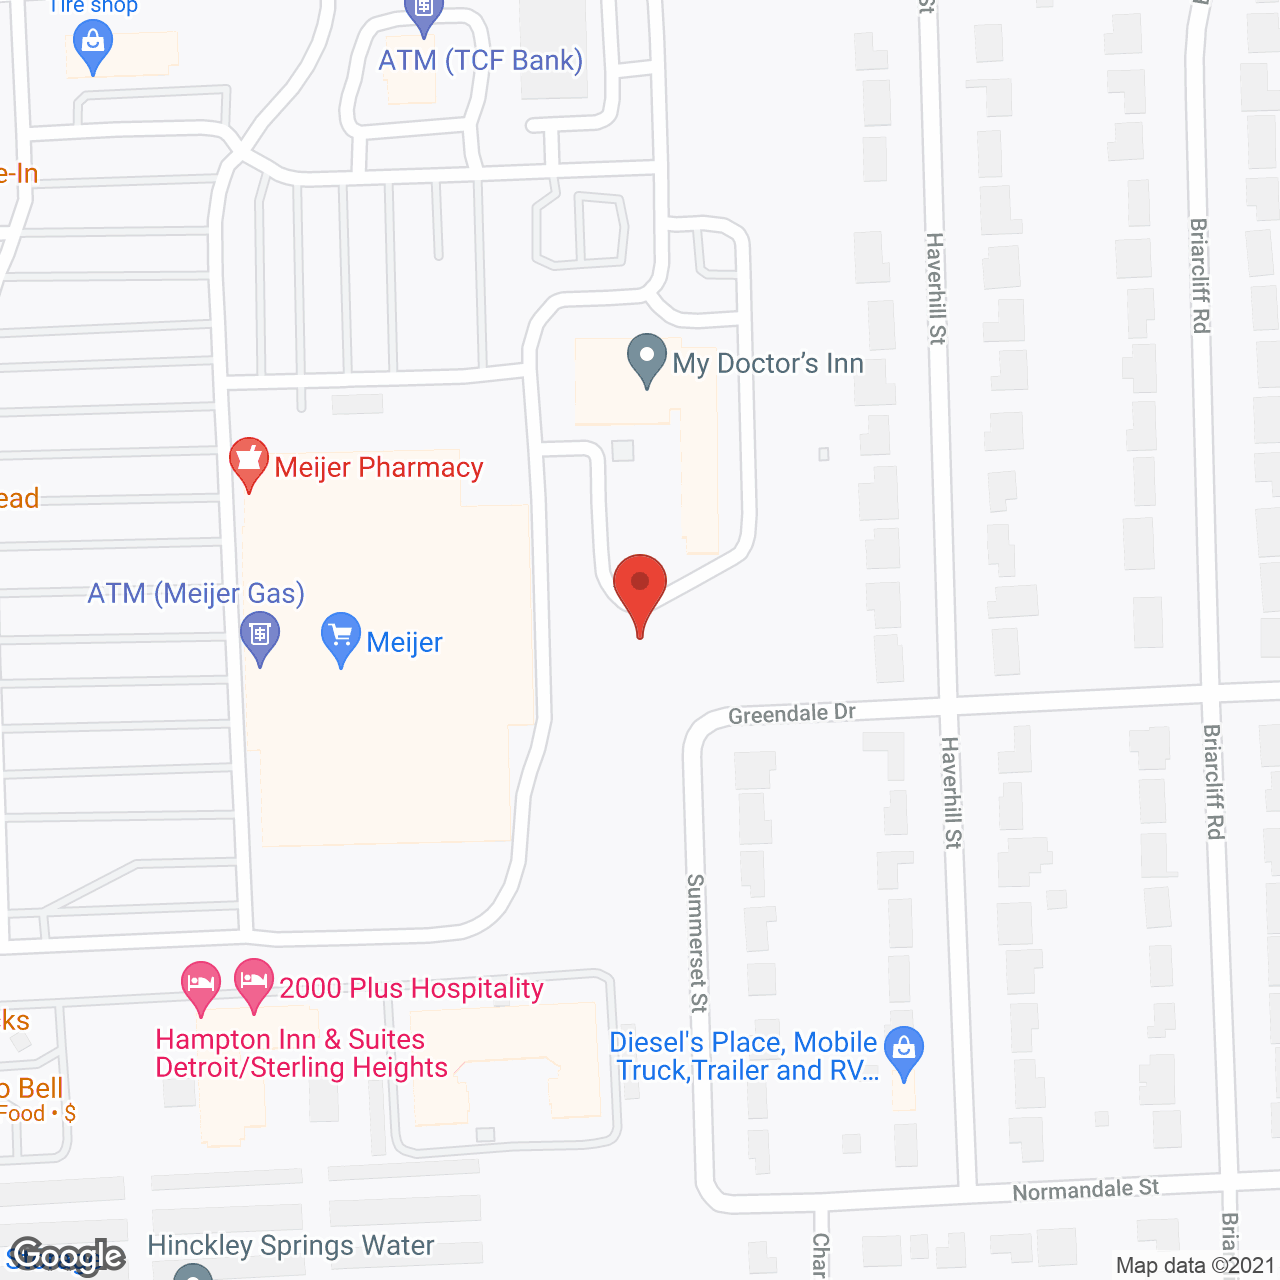 My Doctor's Inn in google map